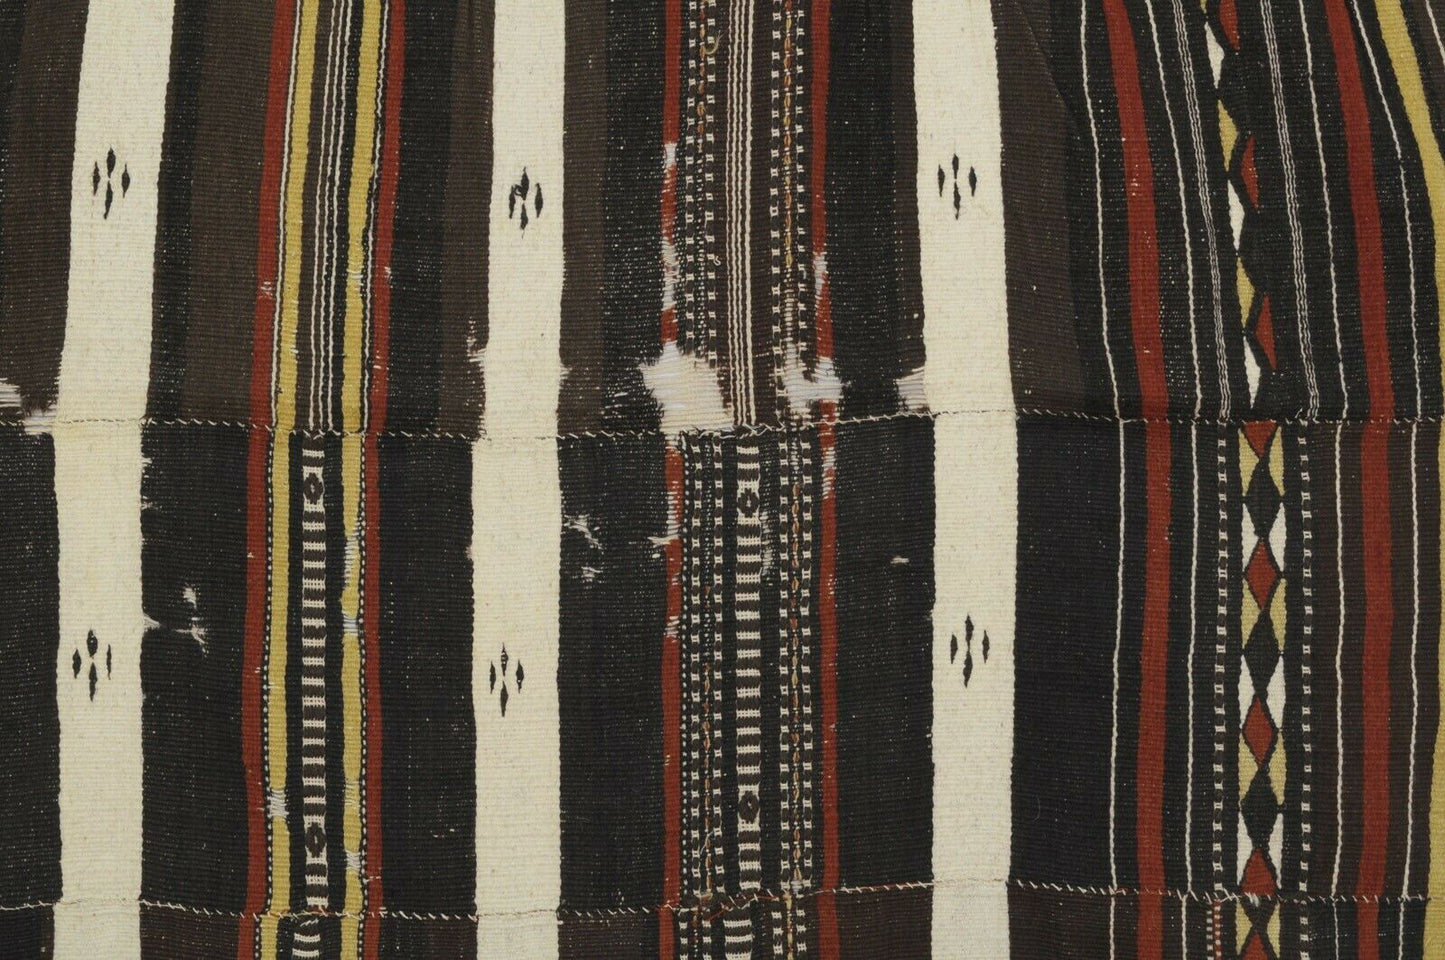 RARE Old Arkilla Kerka African cloth Art Fulani wedding blanket Mali - Tribalgh